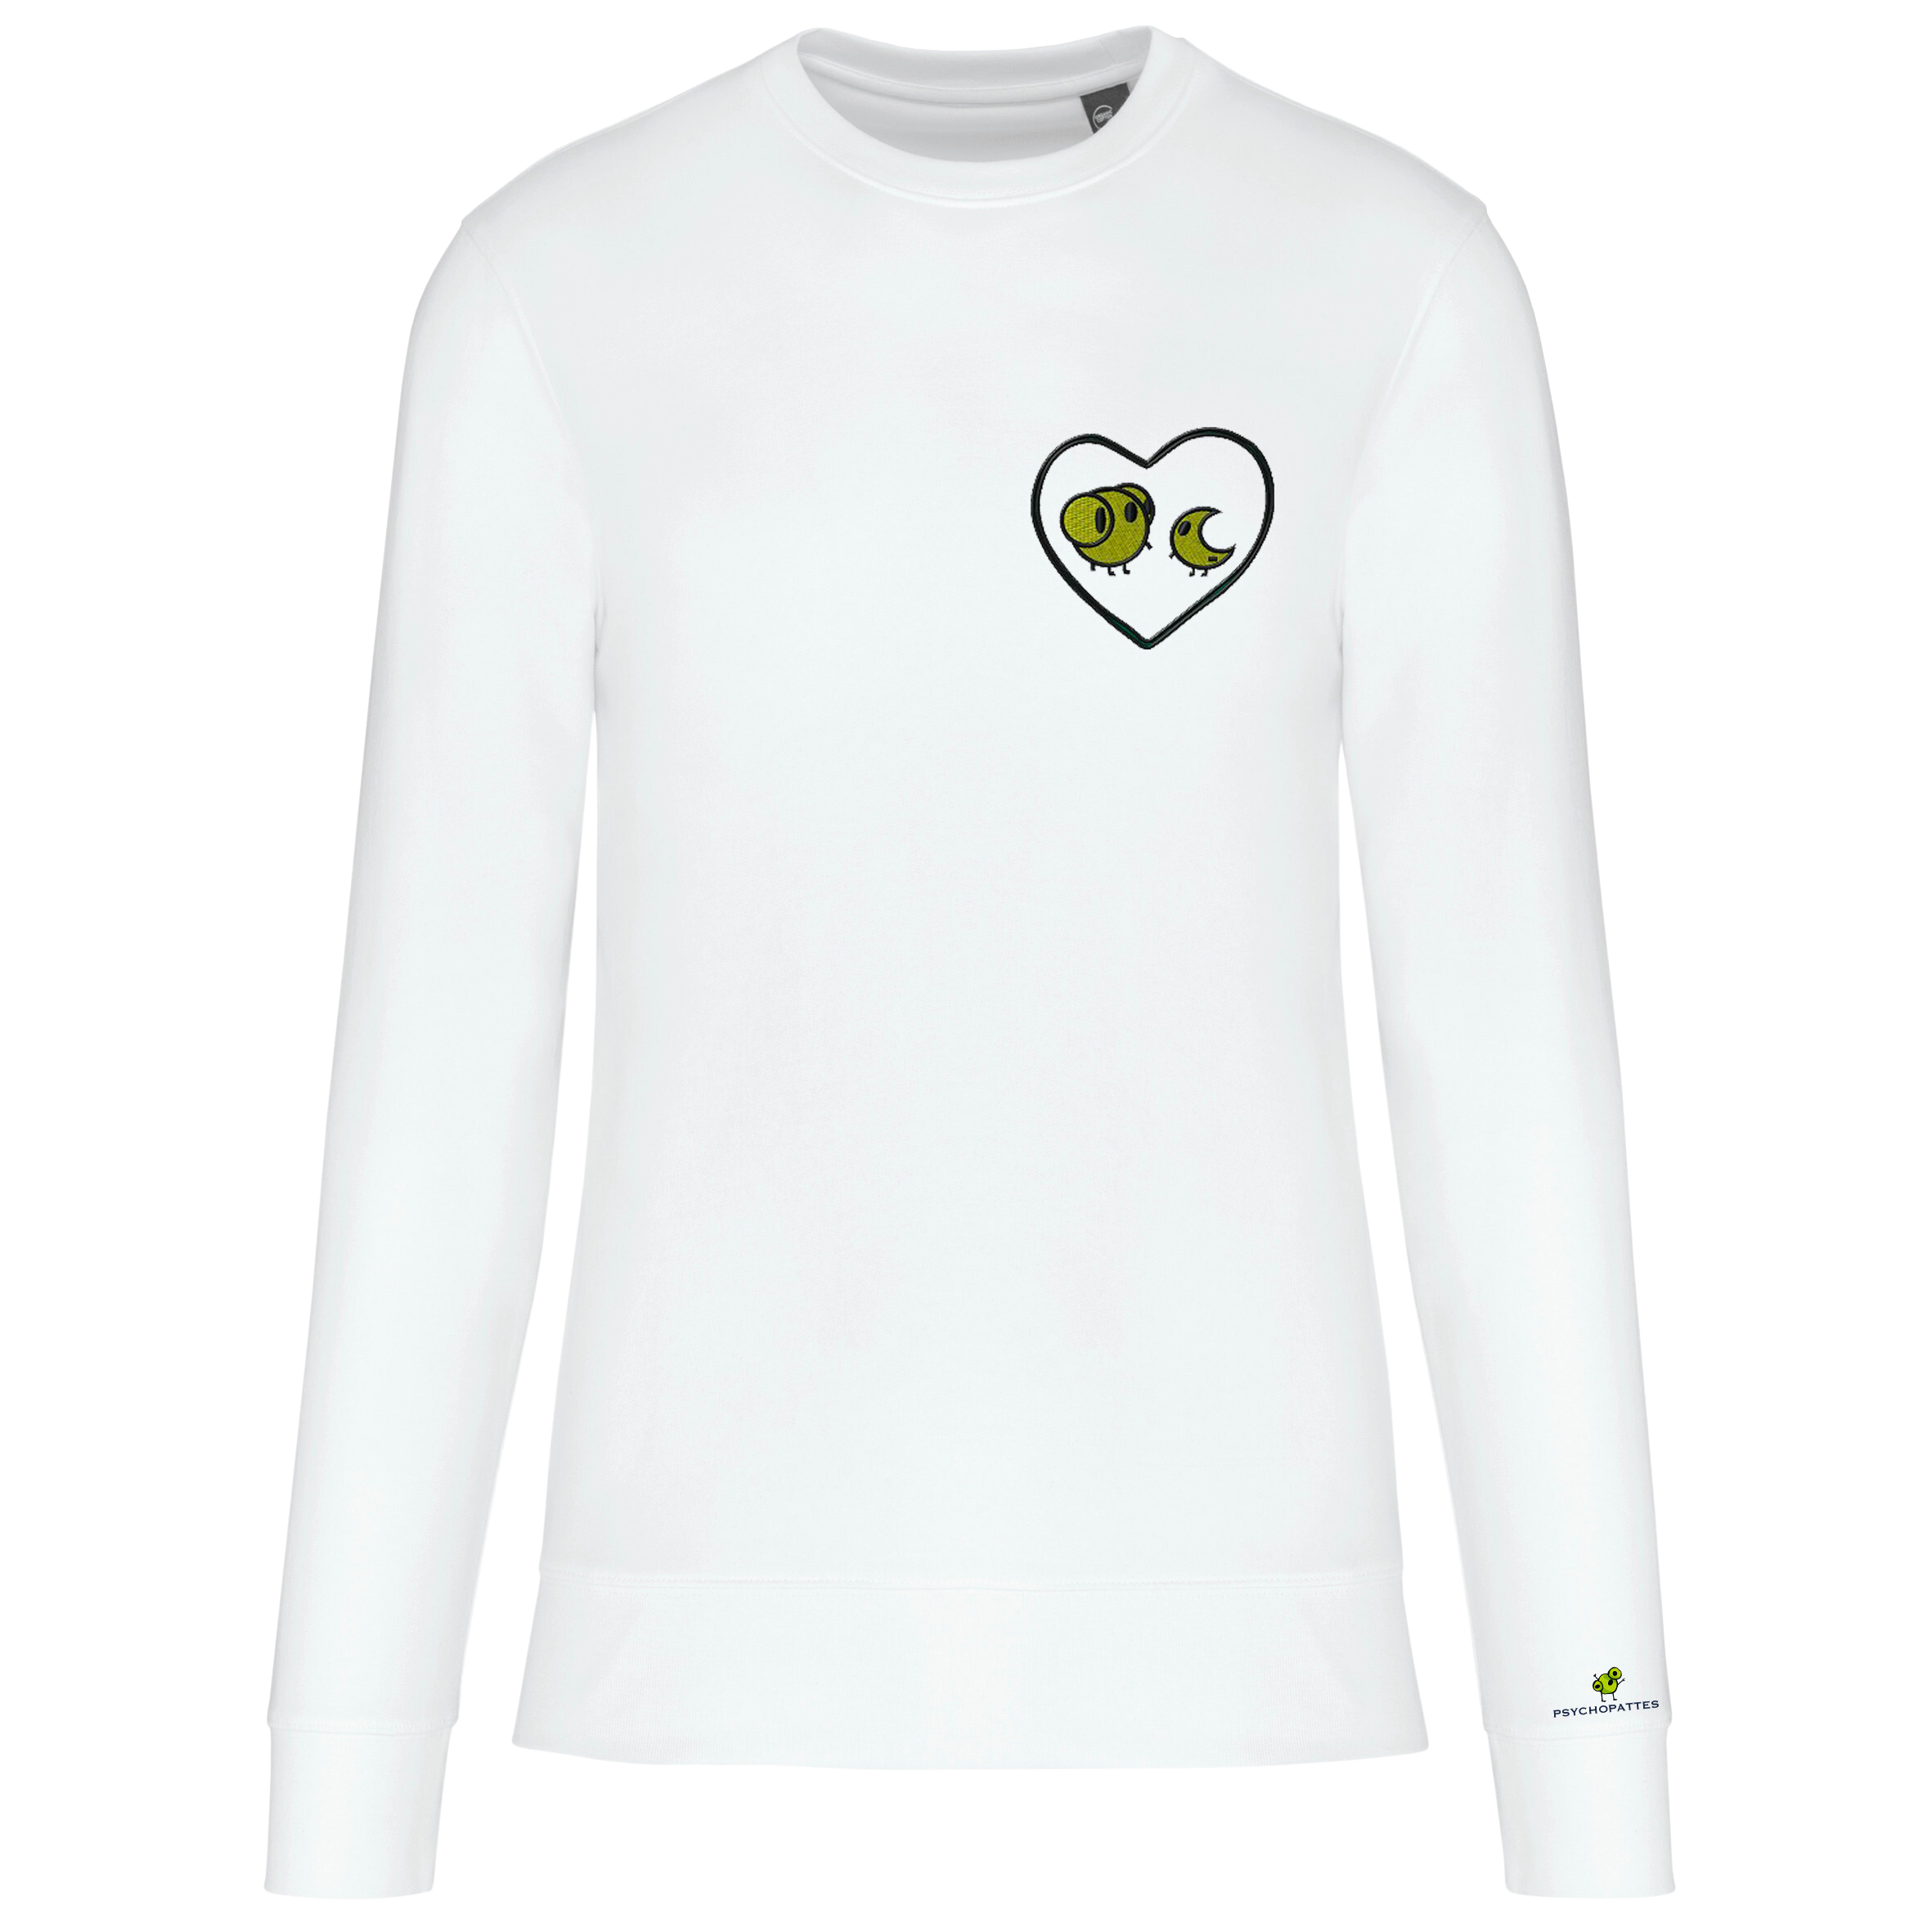 Tolerant - Eco-responsible sweatshirt, round neck, unisex personalized embroidered